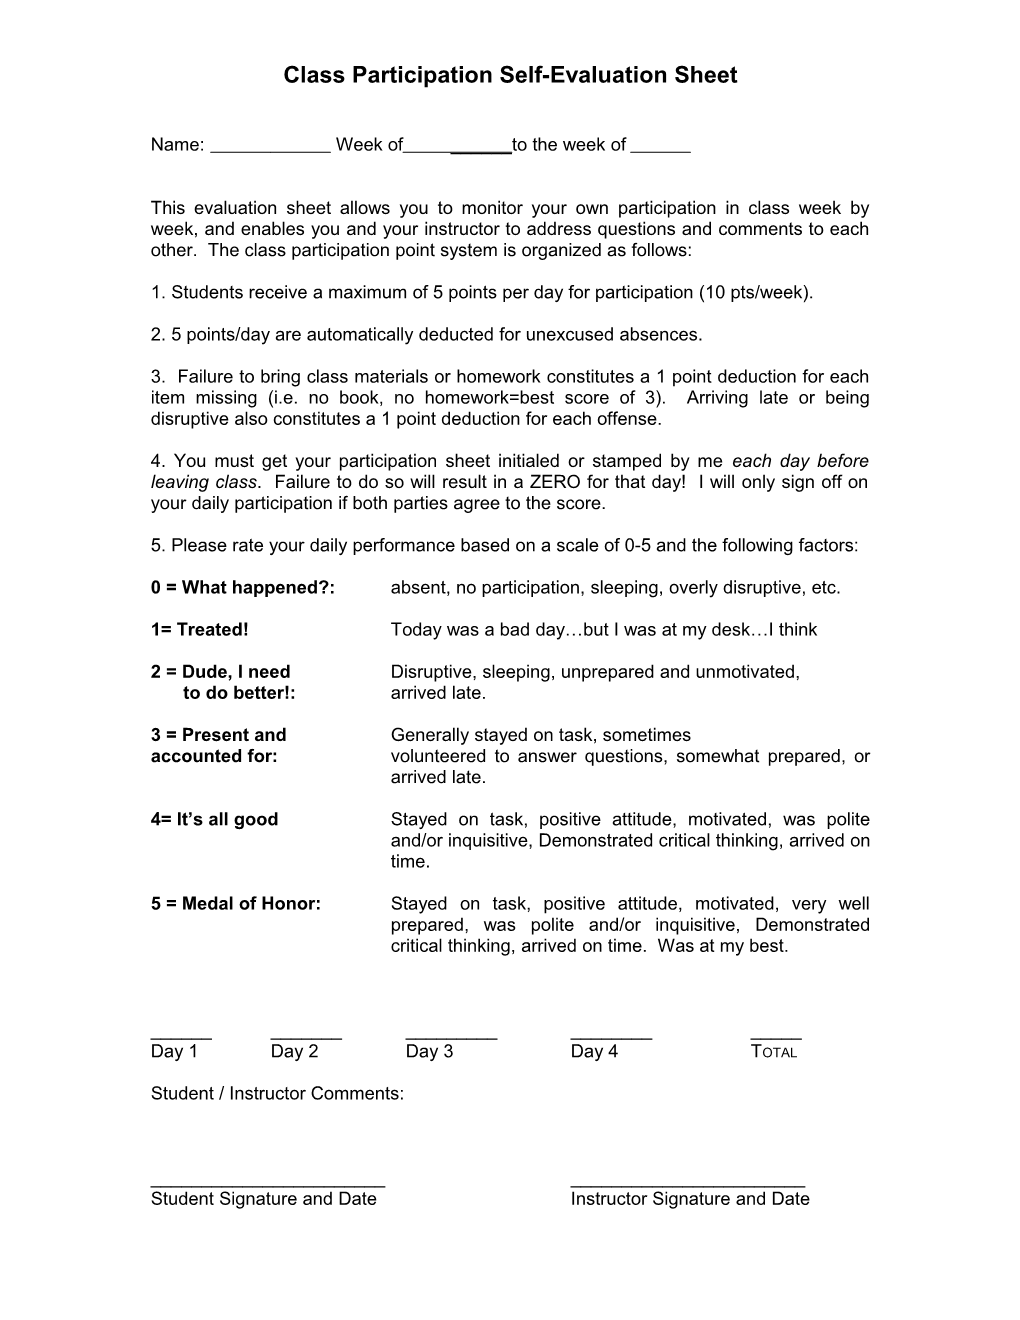 Class Participation Self-Evaluation Sheet